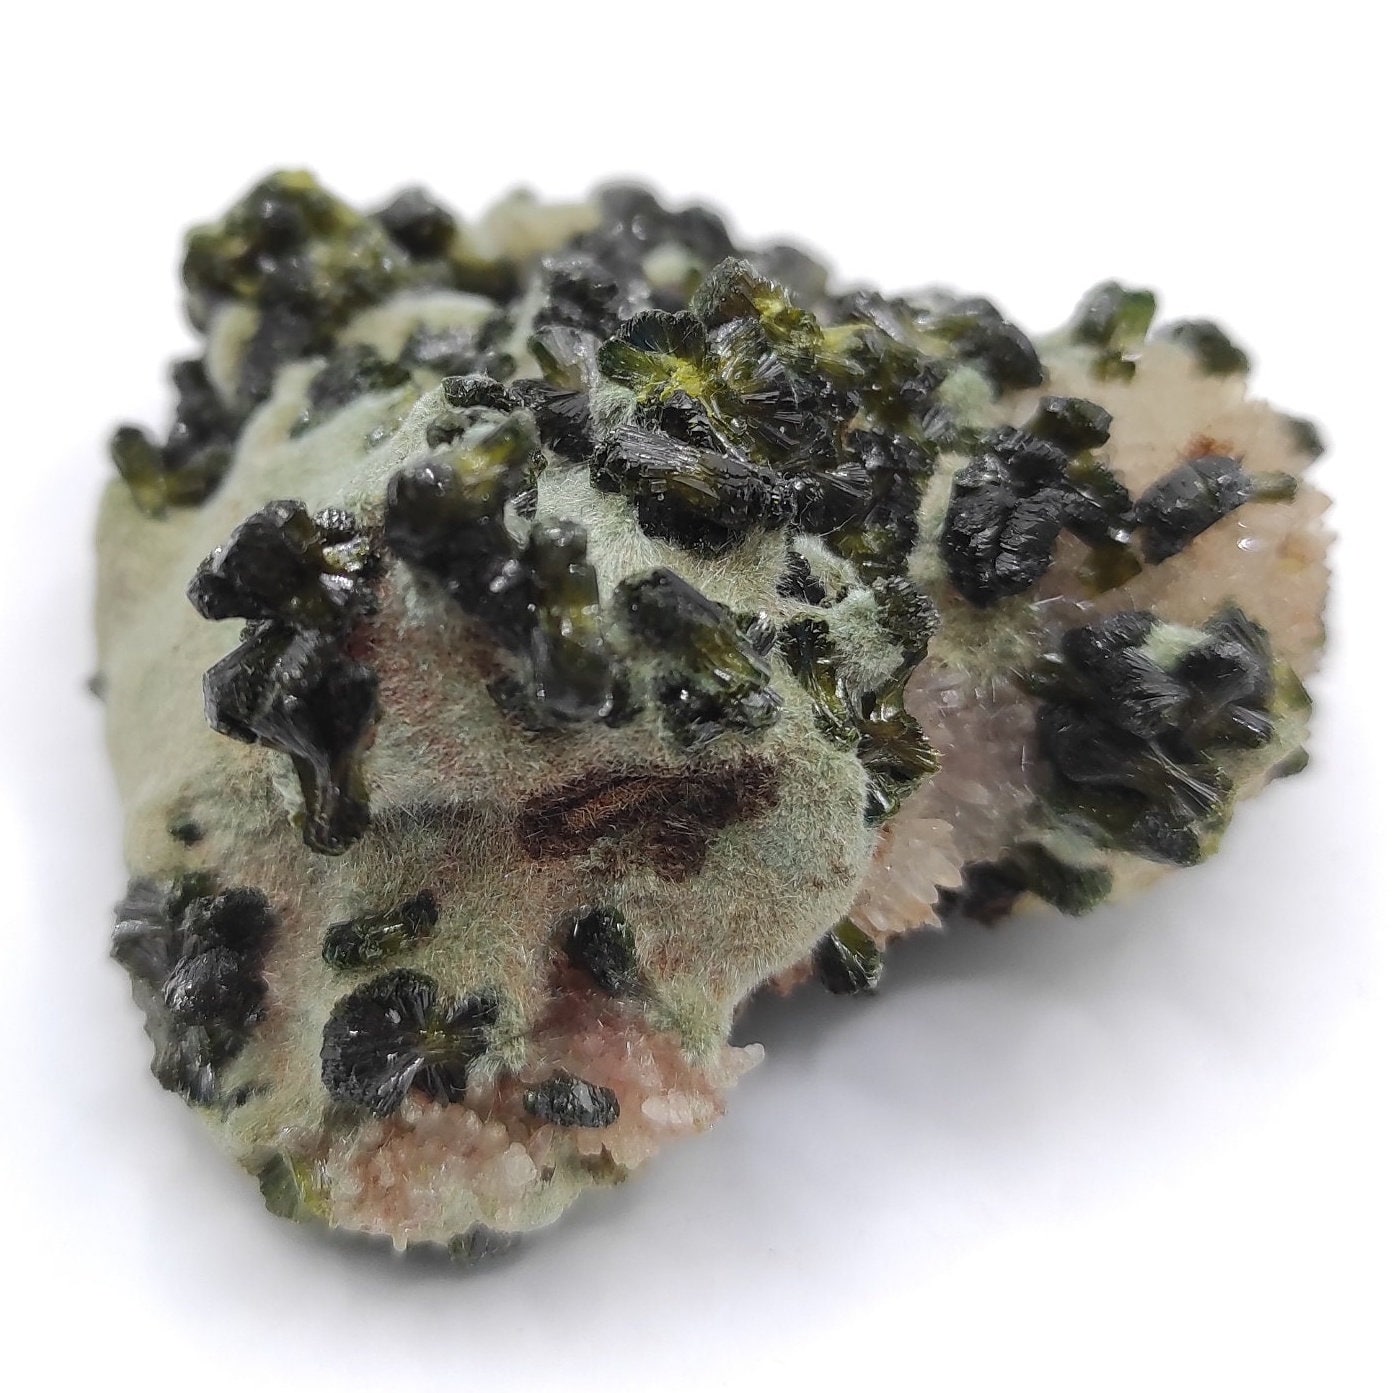 72g Epidote with Quartz - Imilchil, Morocco - Green Epidote Crystal Cluster - Raw Mineral Specimen - Green Epidote and Quartz Crystal